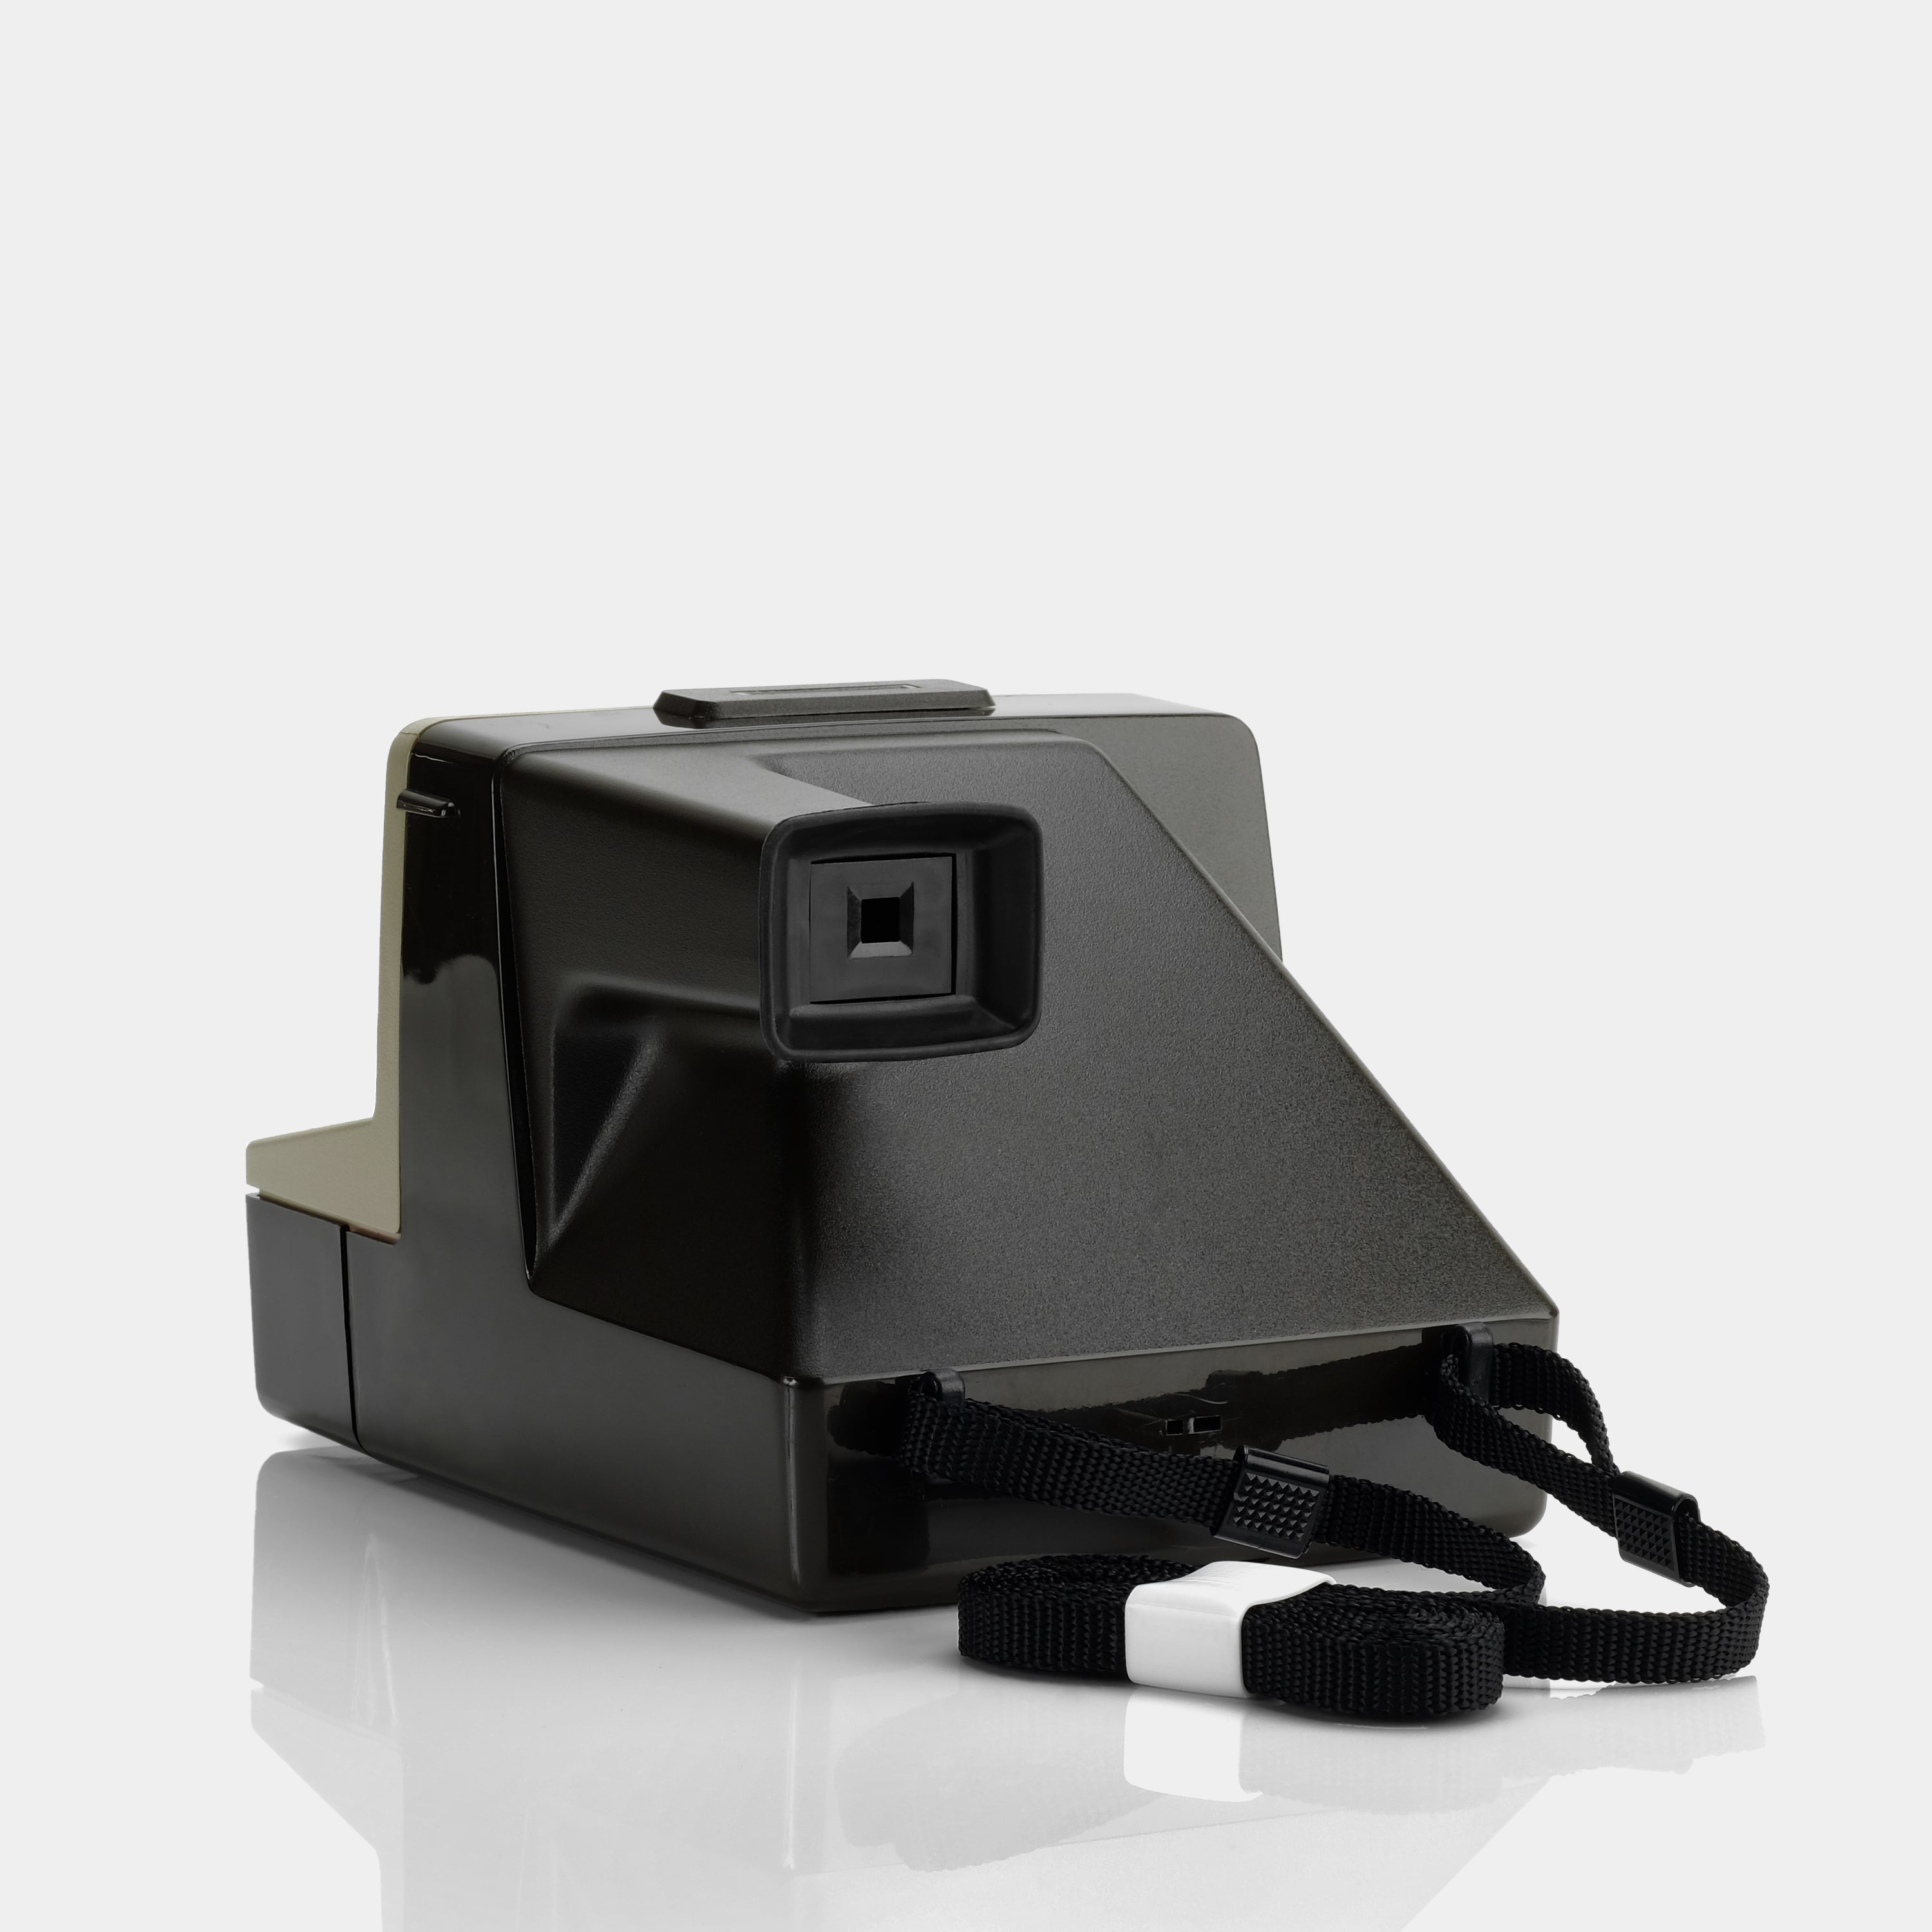 Polaroid SX-70 Pronto! Sears Special Instant Film Camera